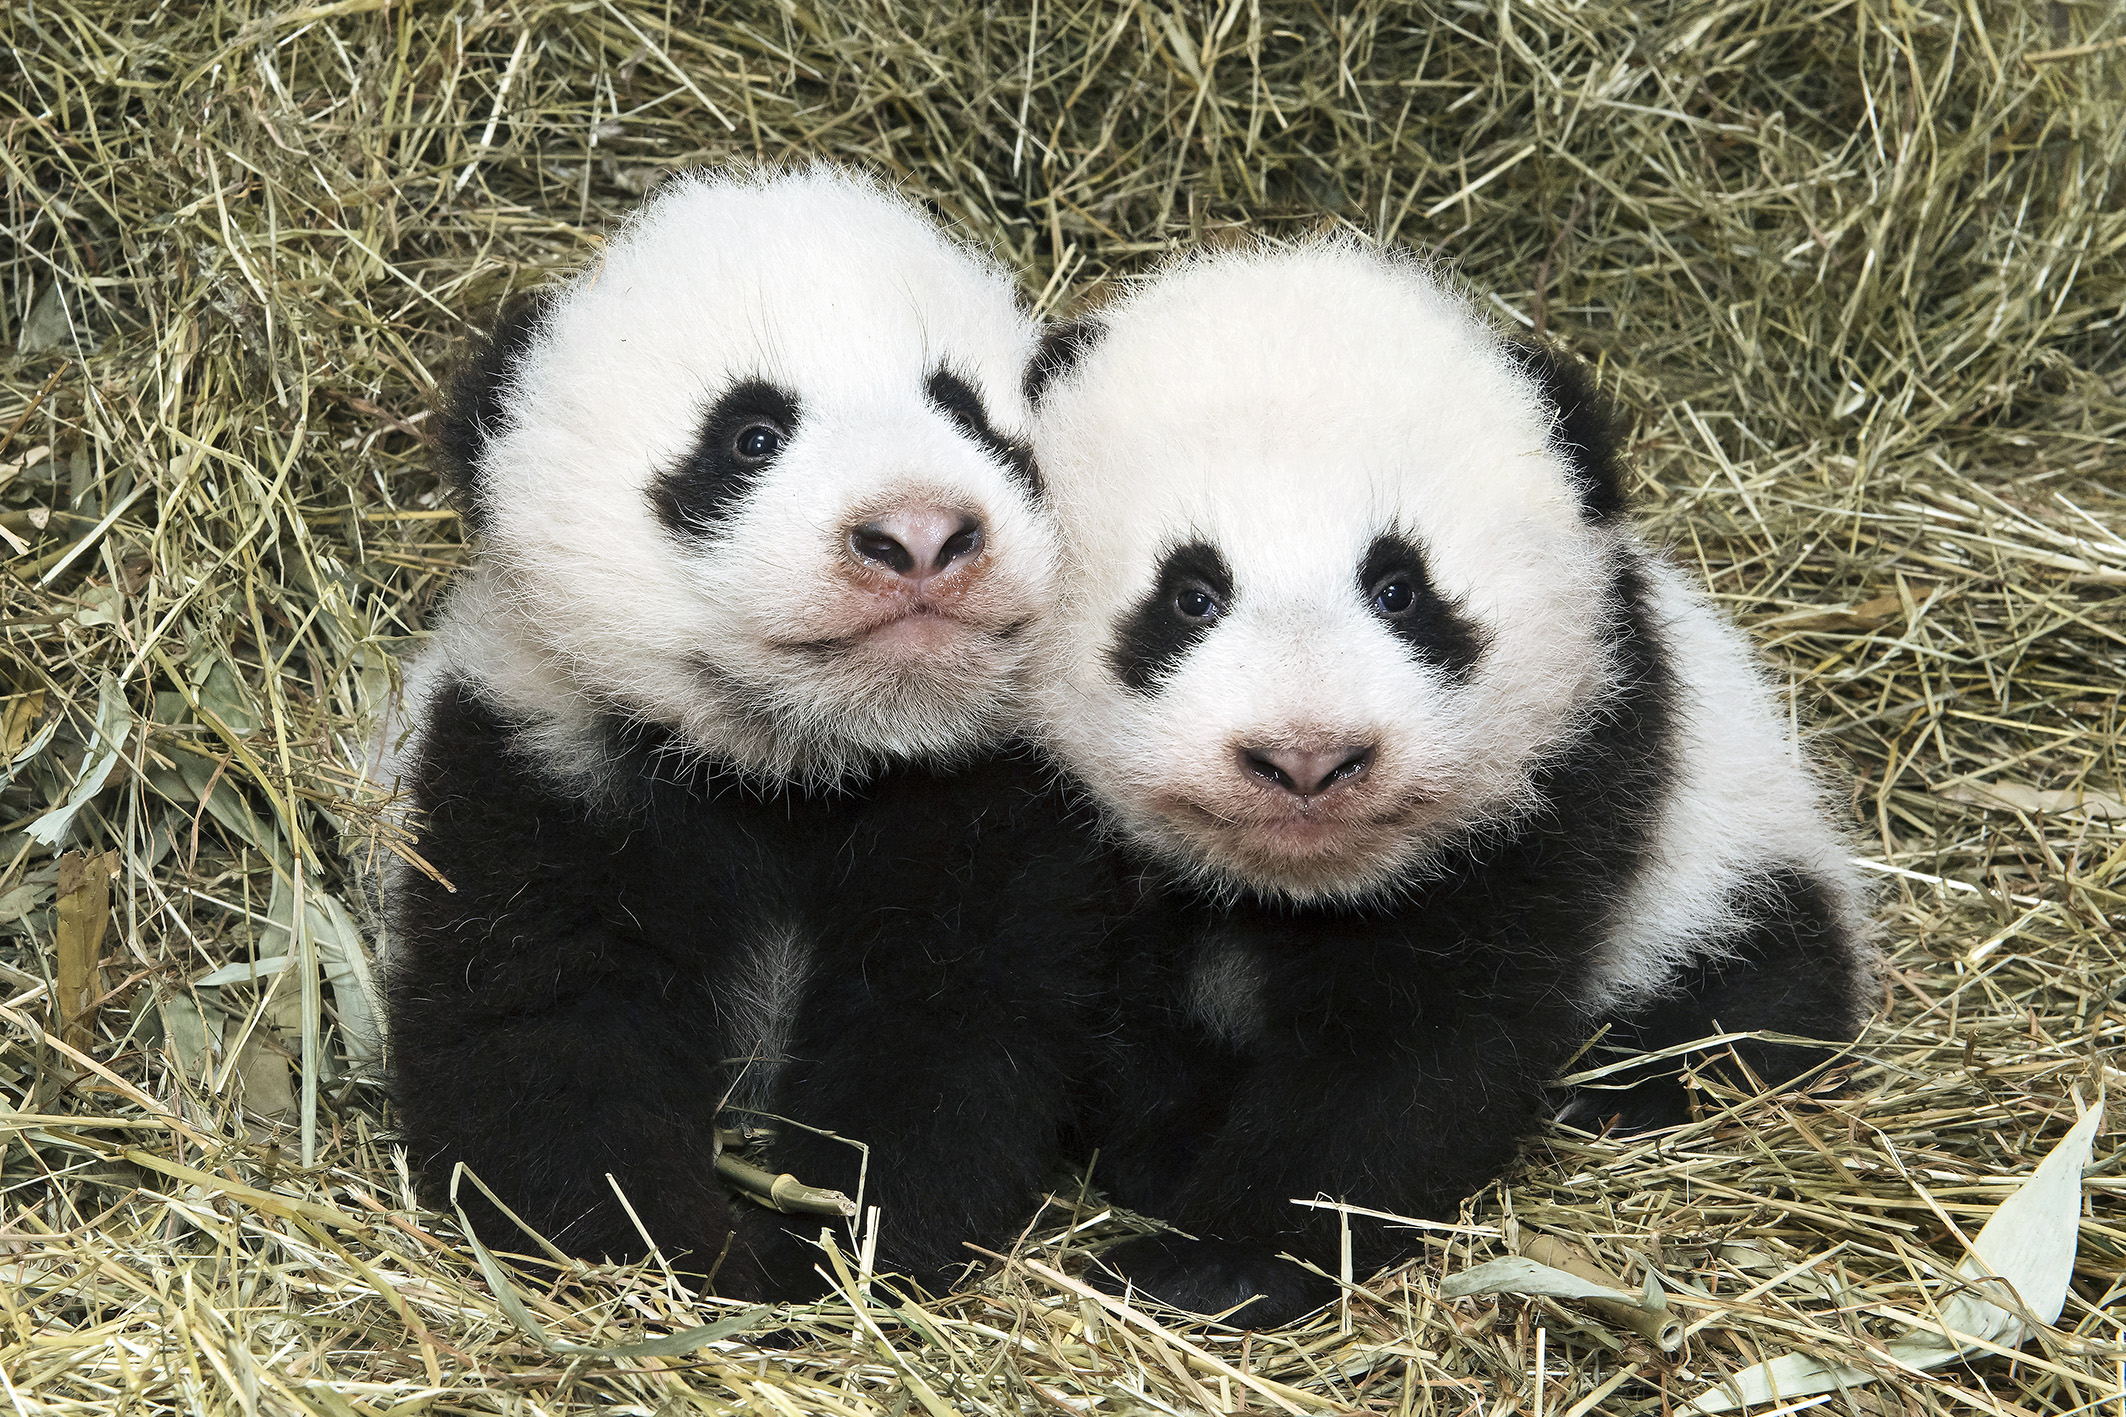 Panda twins Fu Feng and Fu Ban